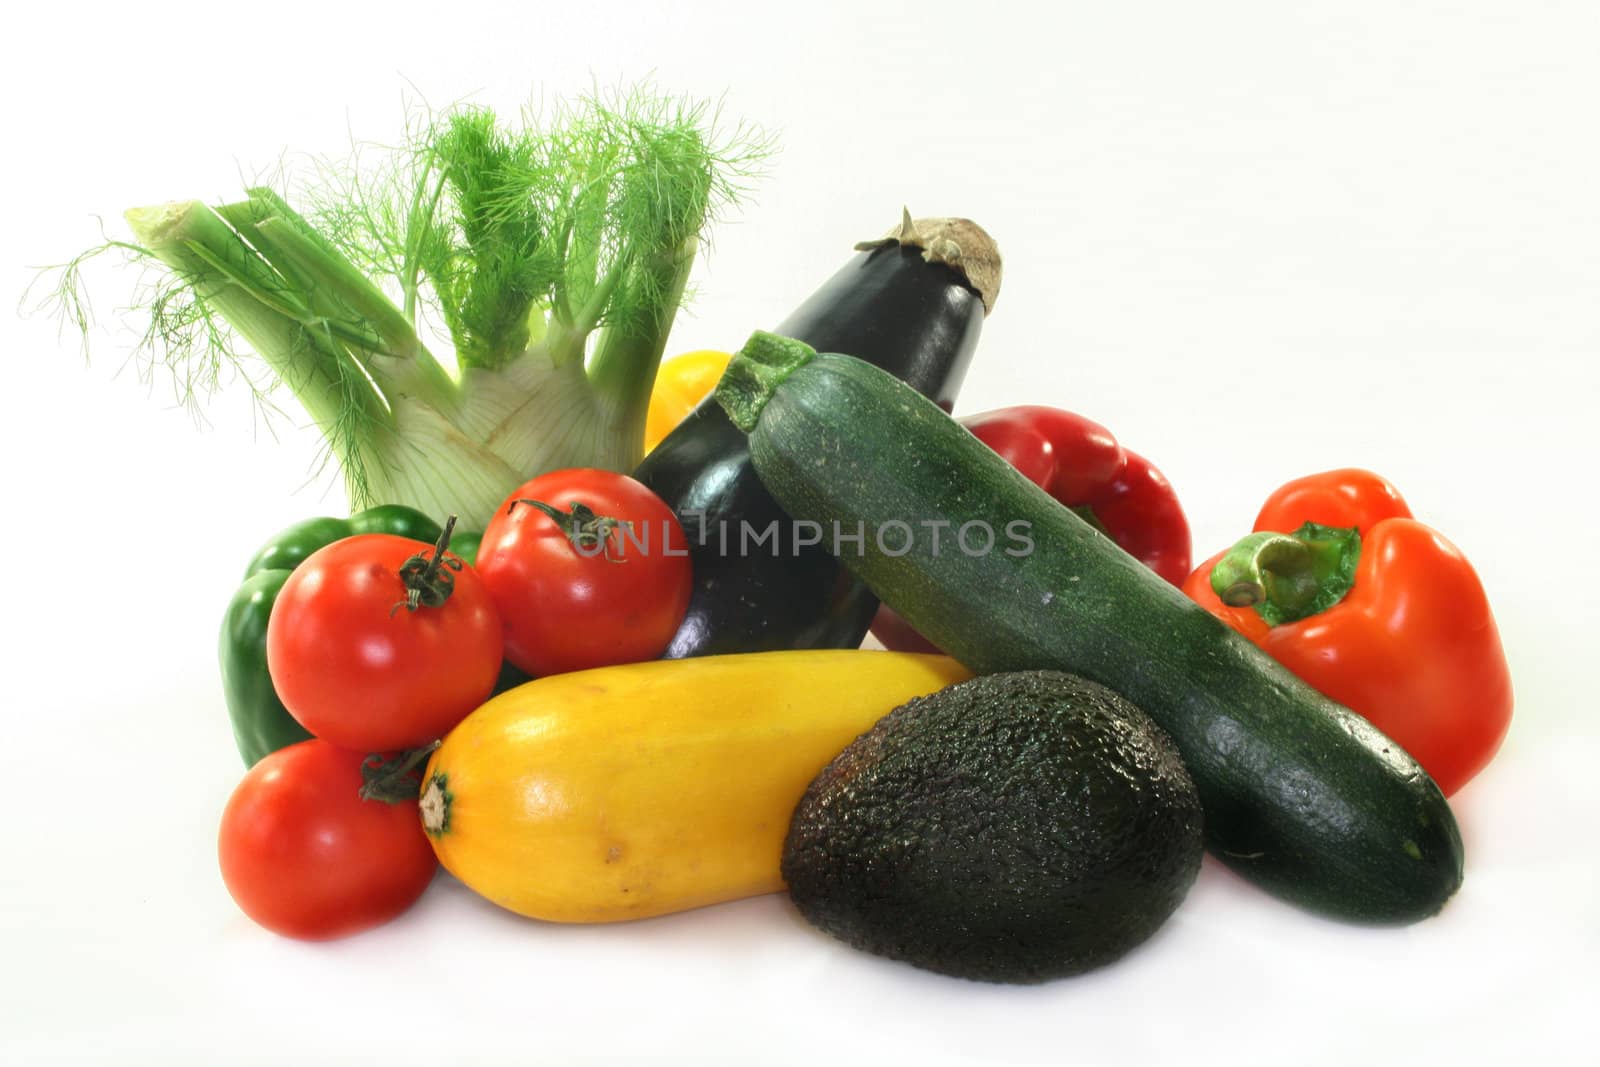 Vegetables by silencefoto